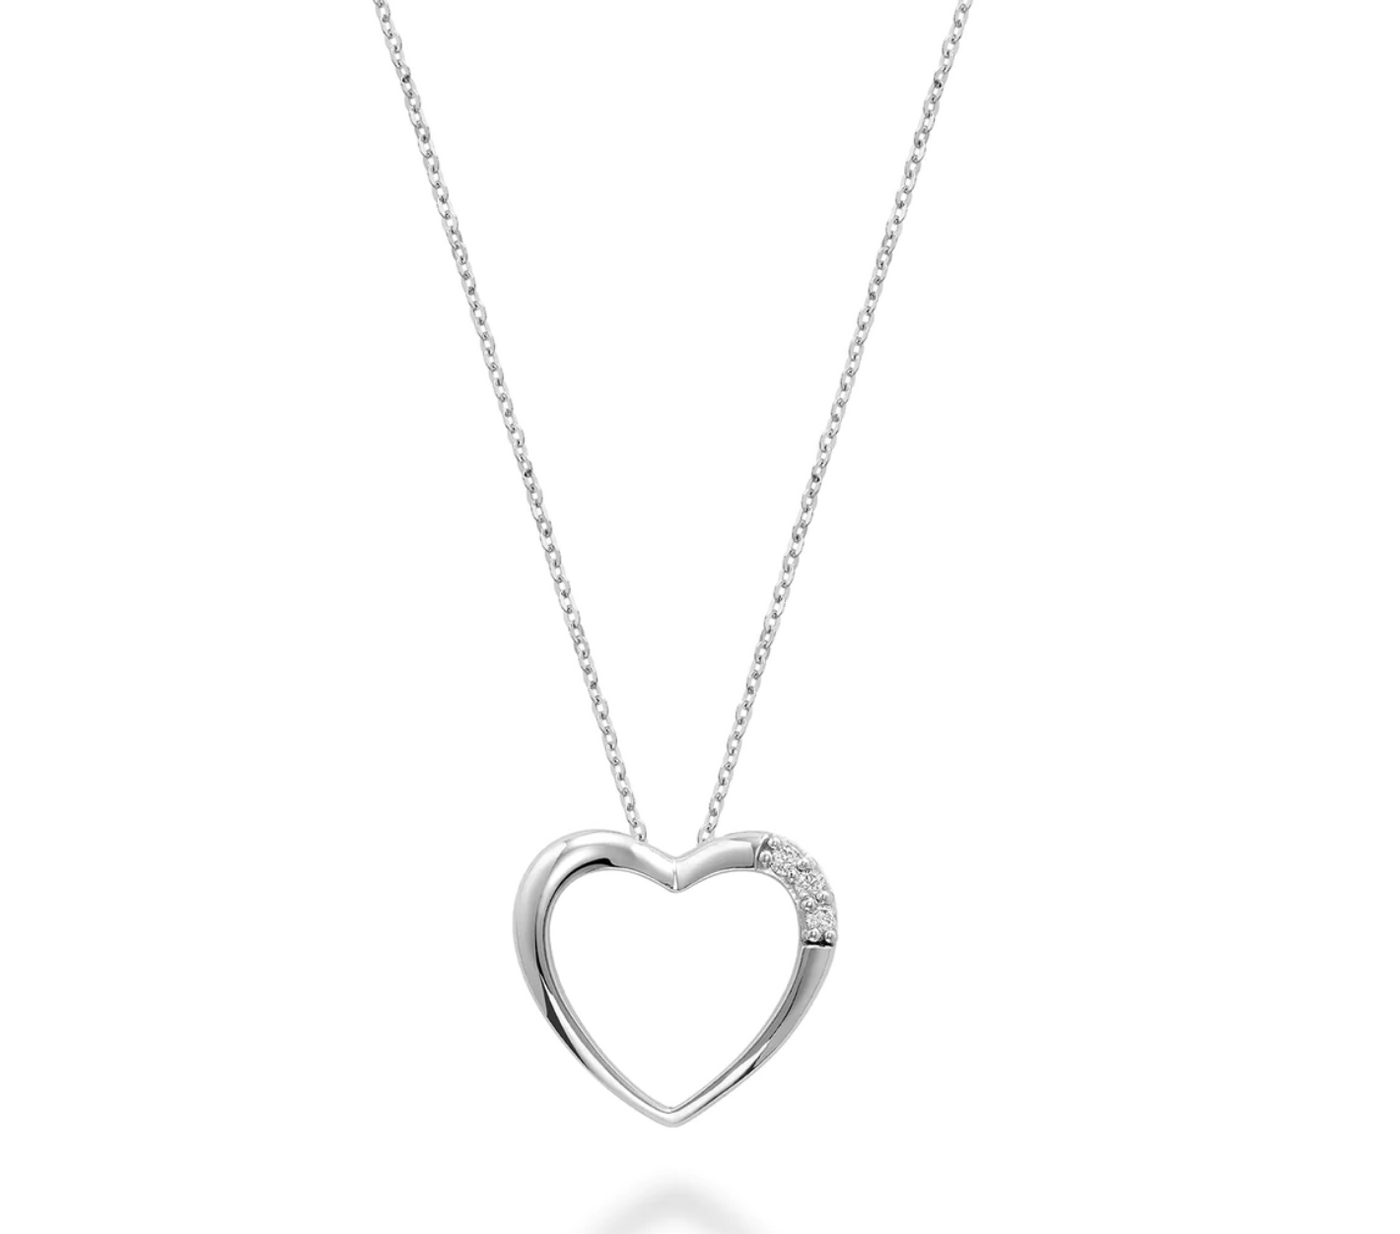 10 Karat Gold Diamond Heart Necklace